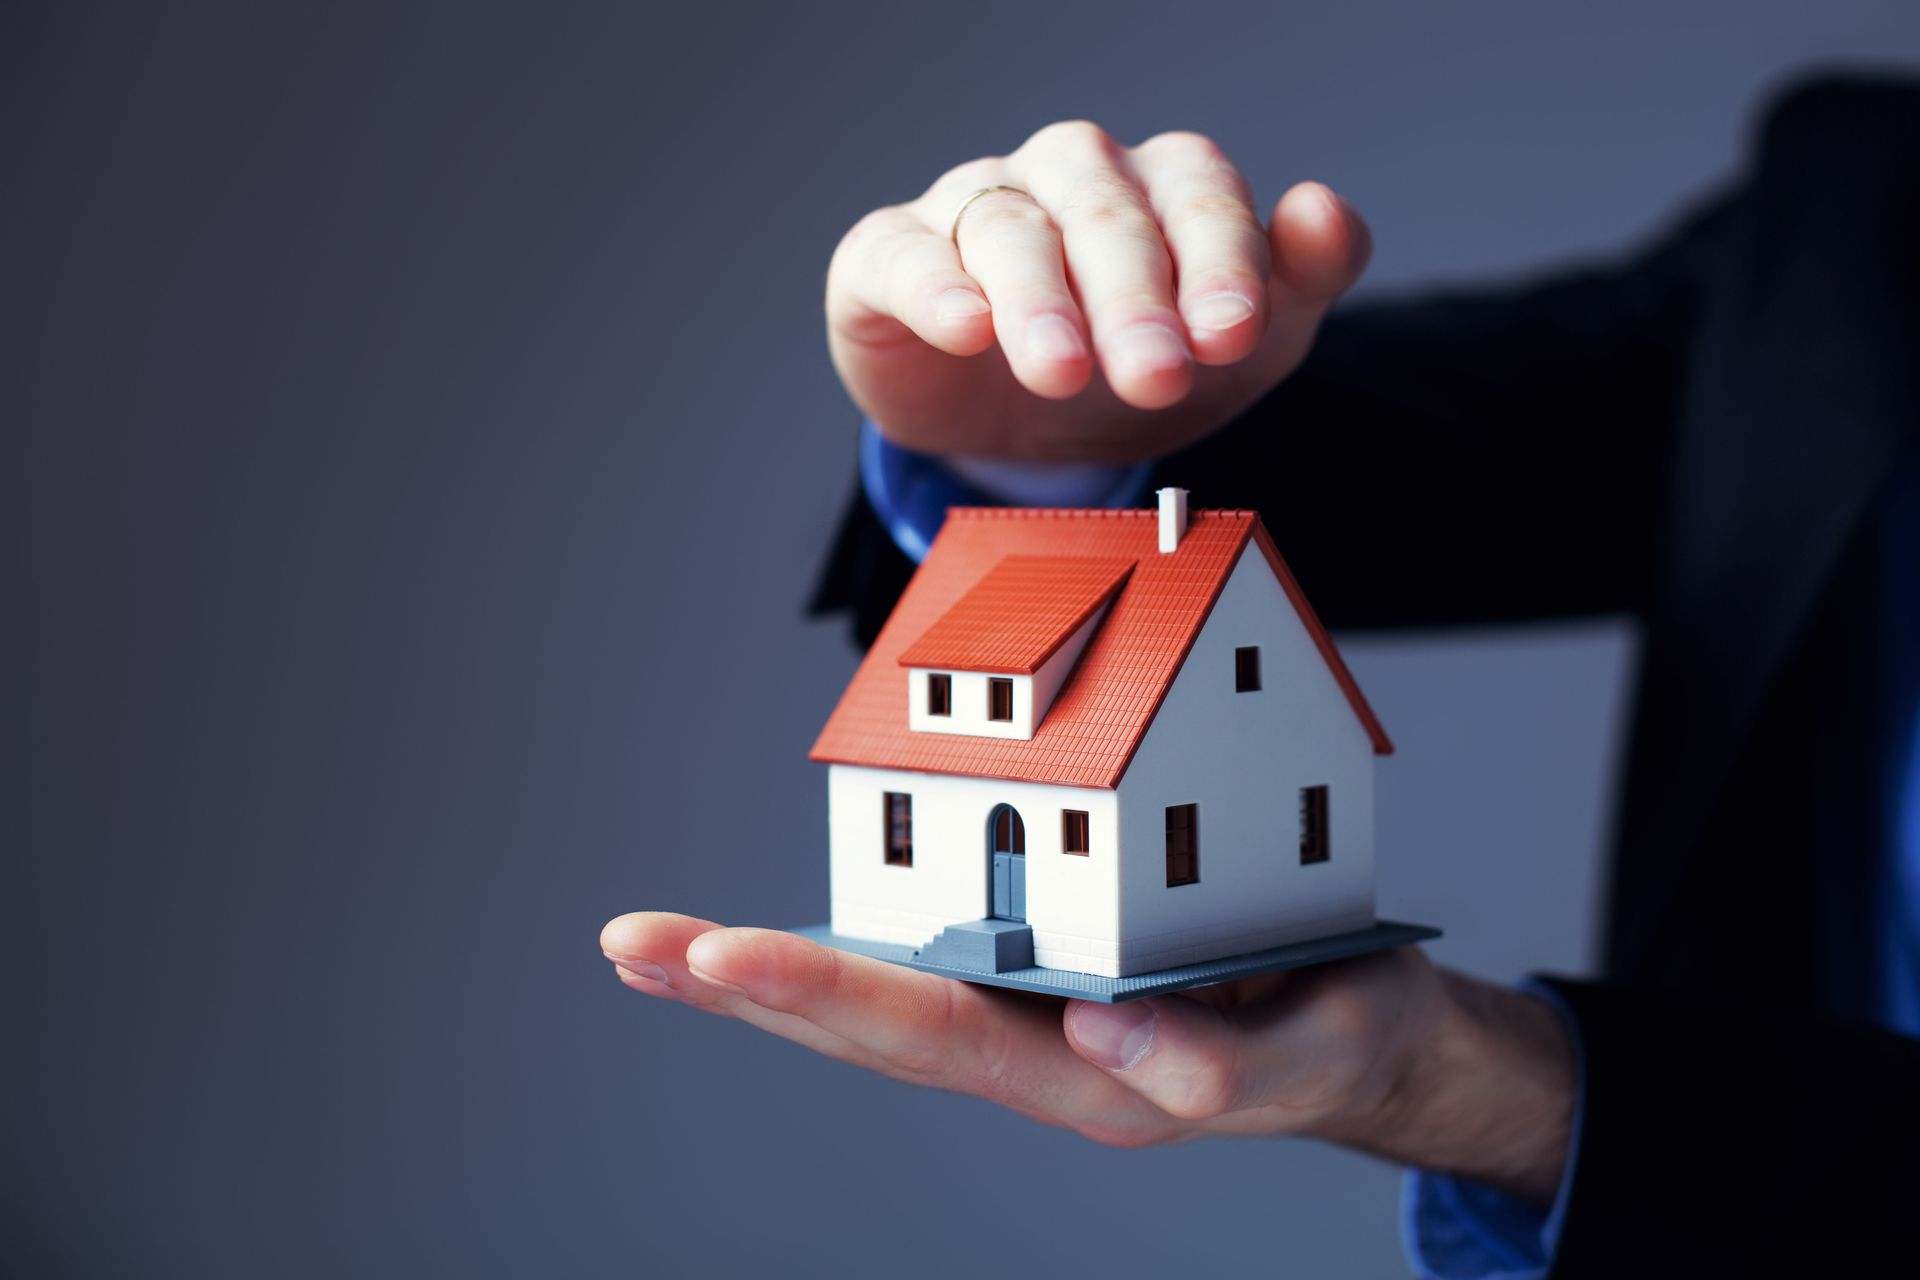 homeowners insurance companies